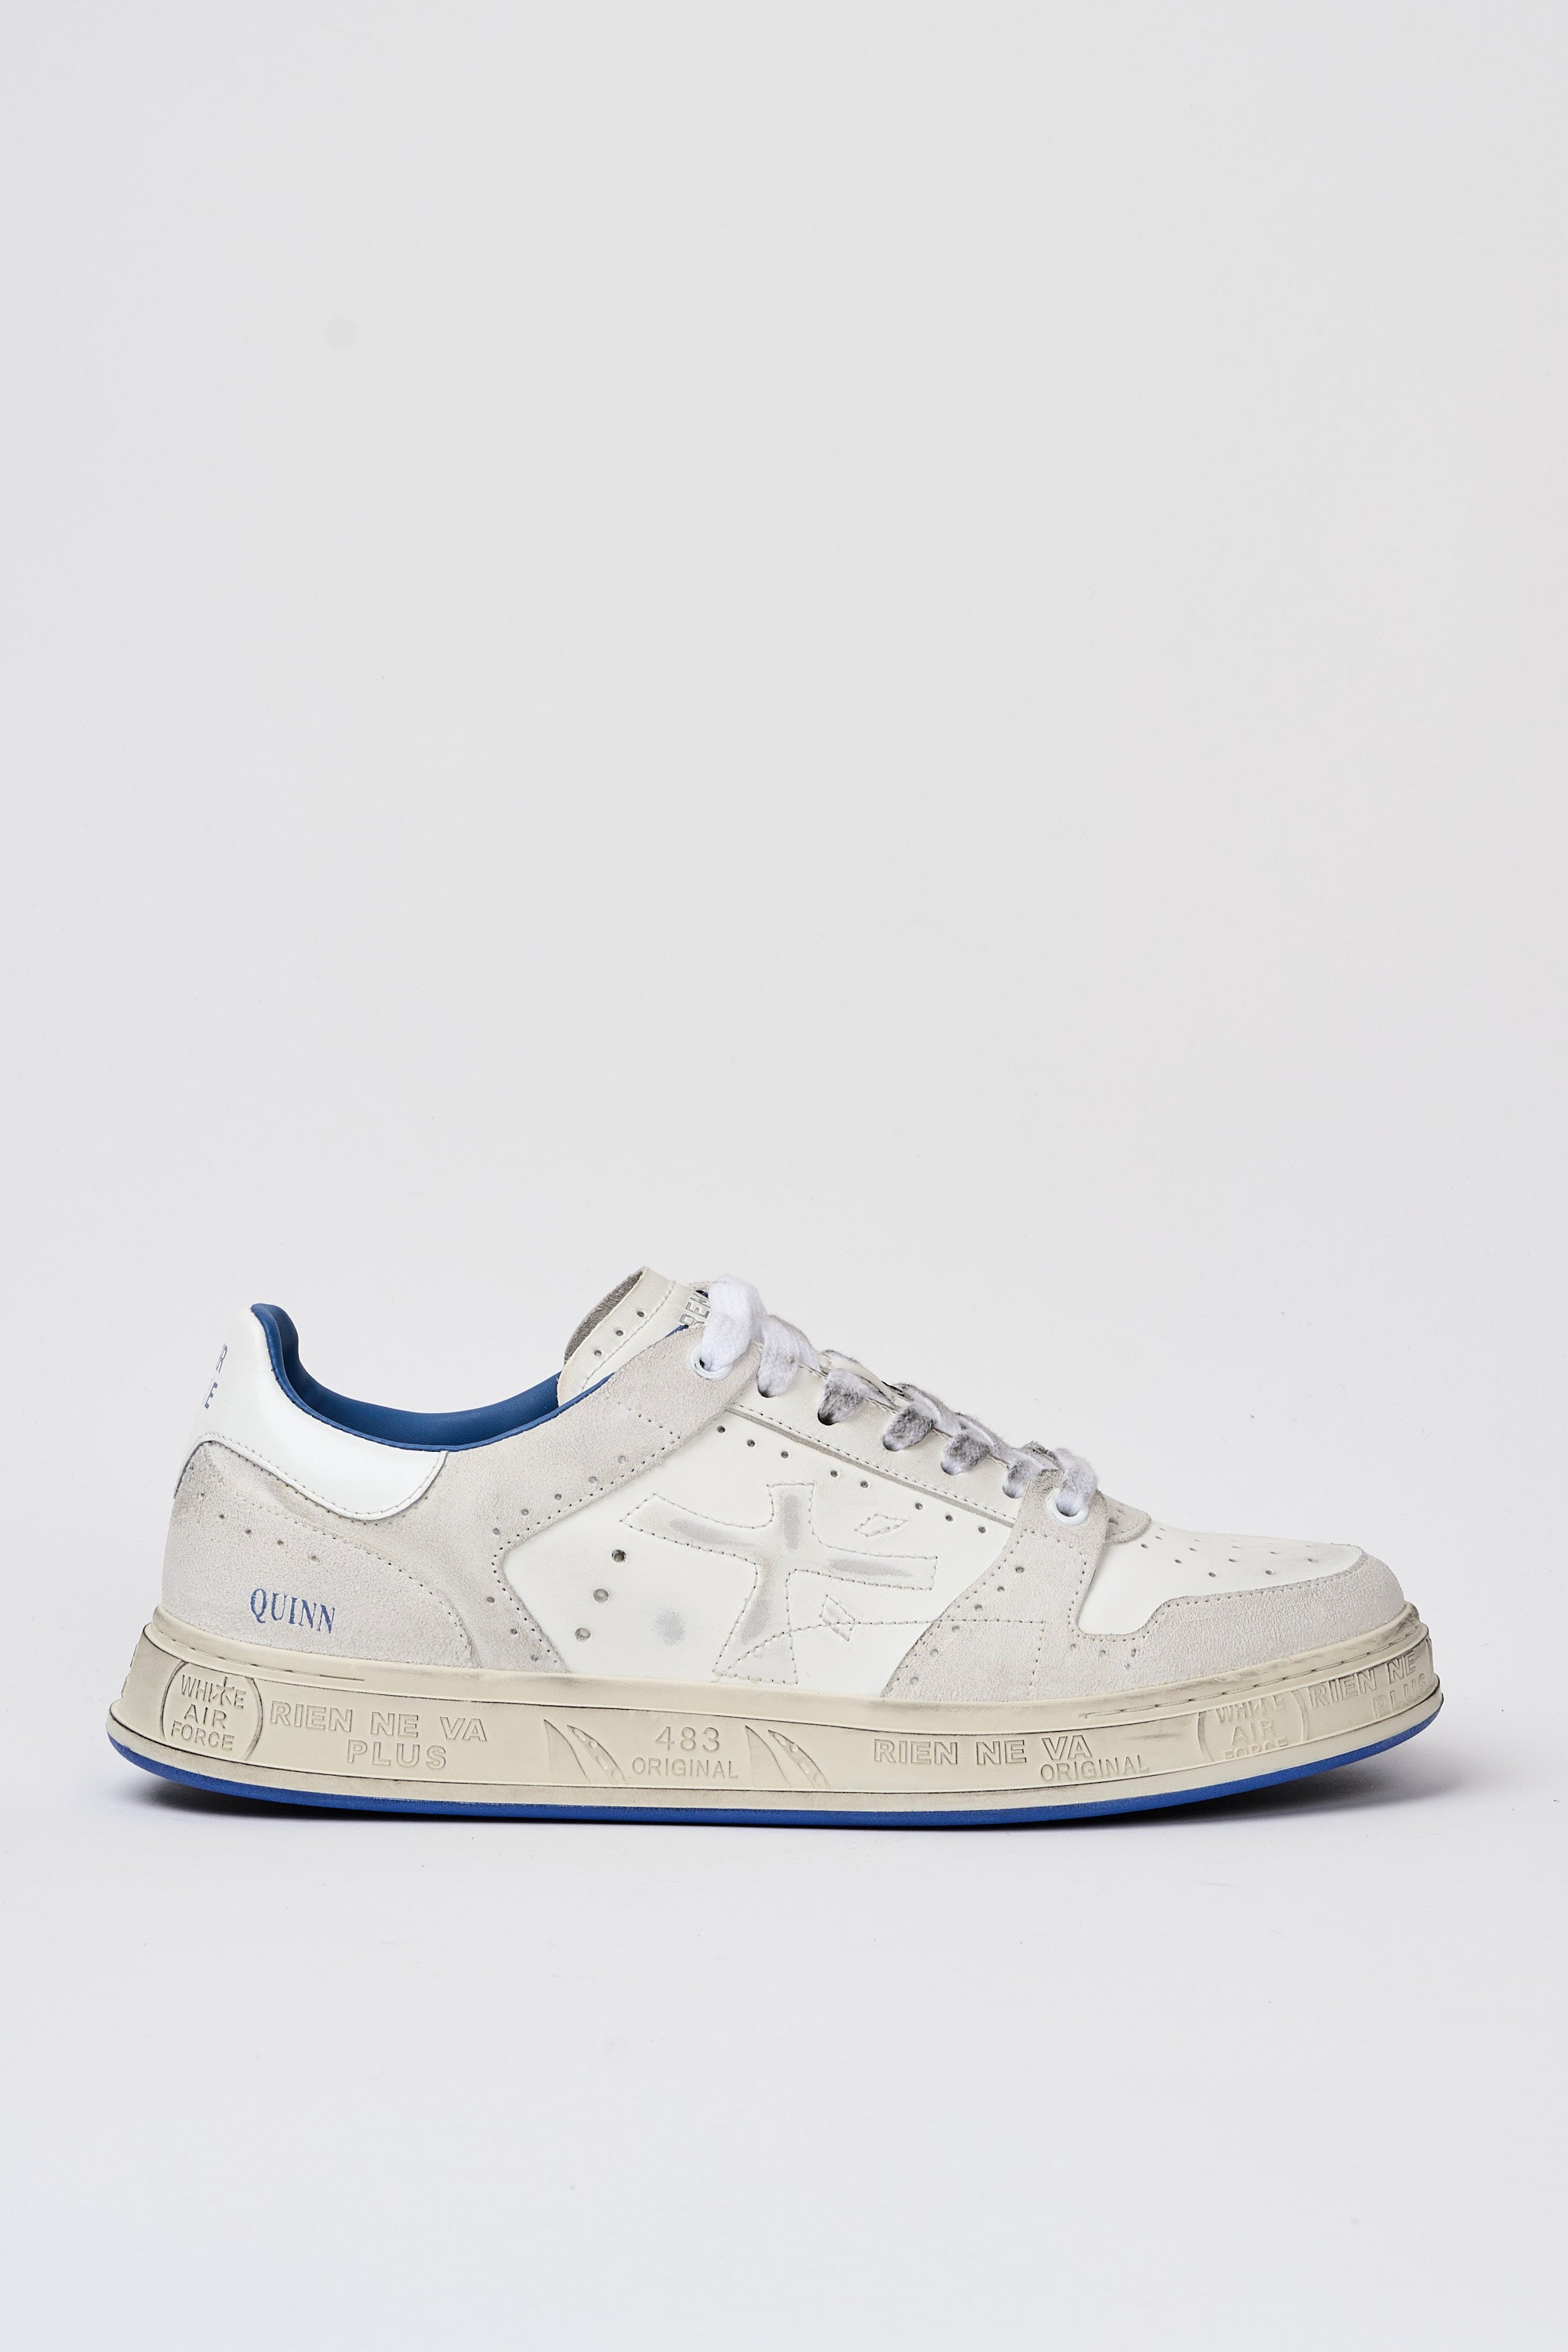 Premiata Sneakers Quinn Leather/Suede White-1